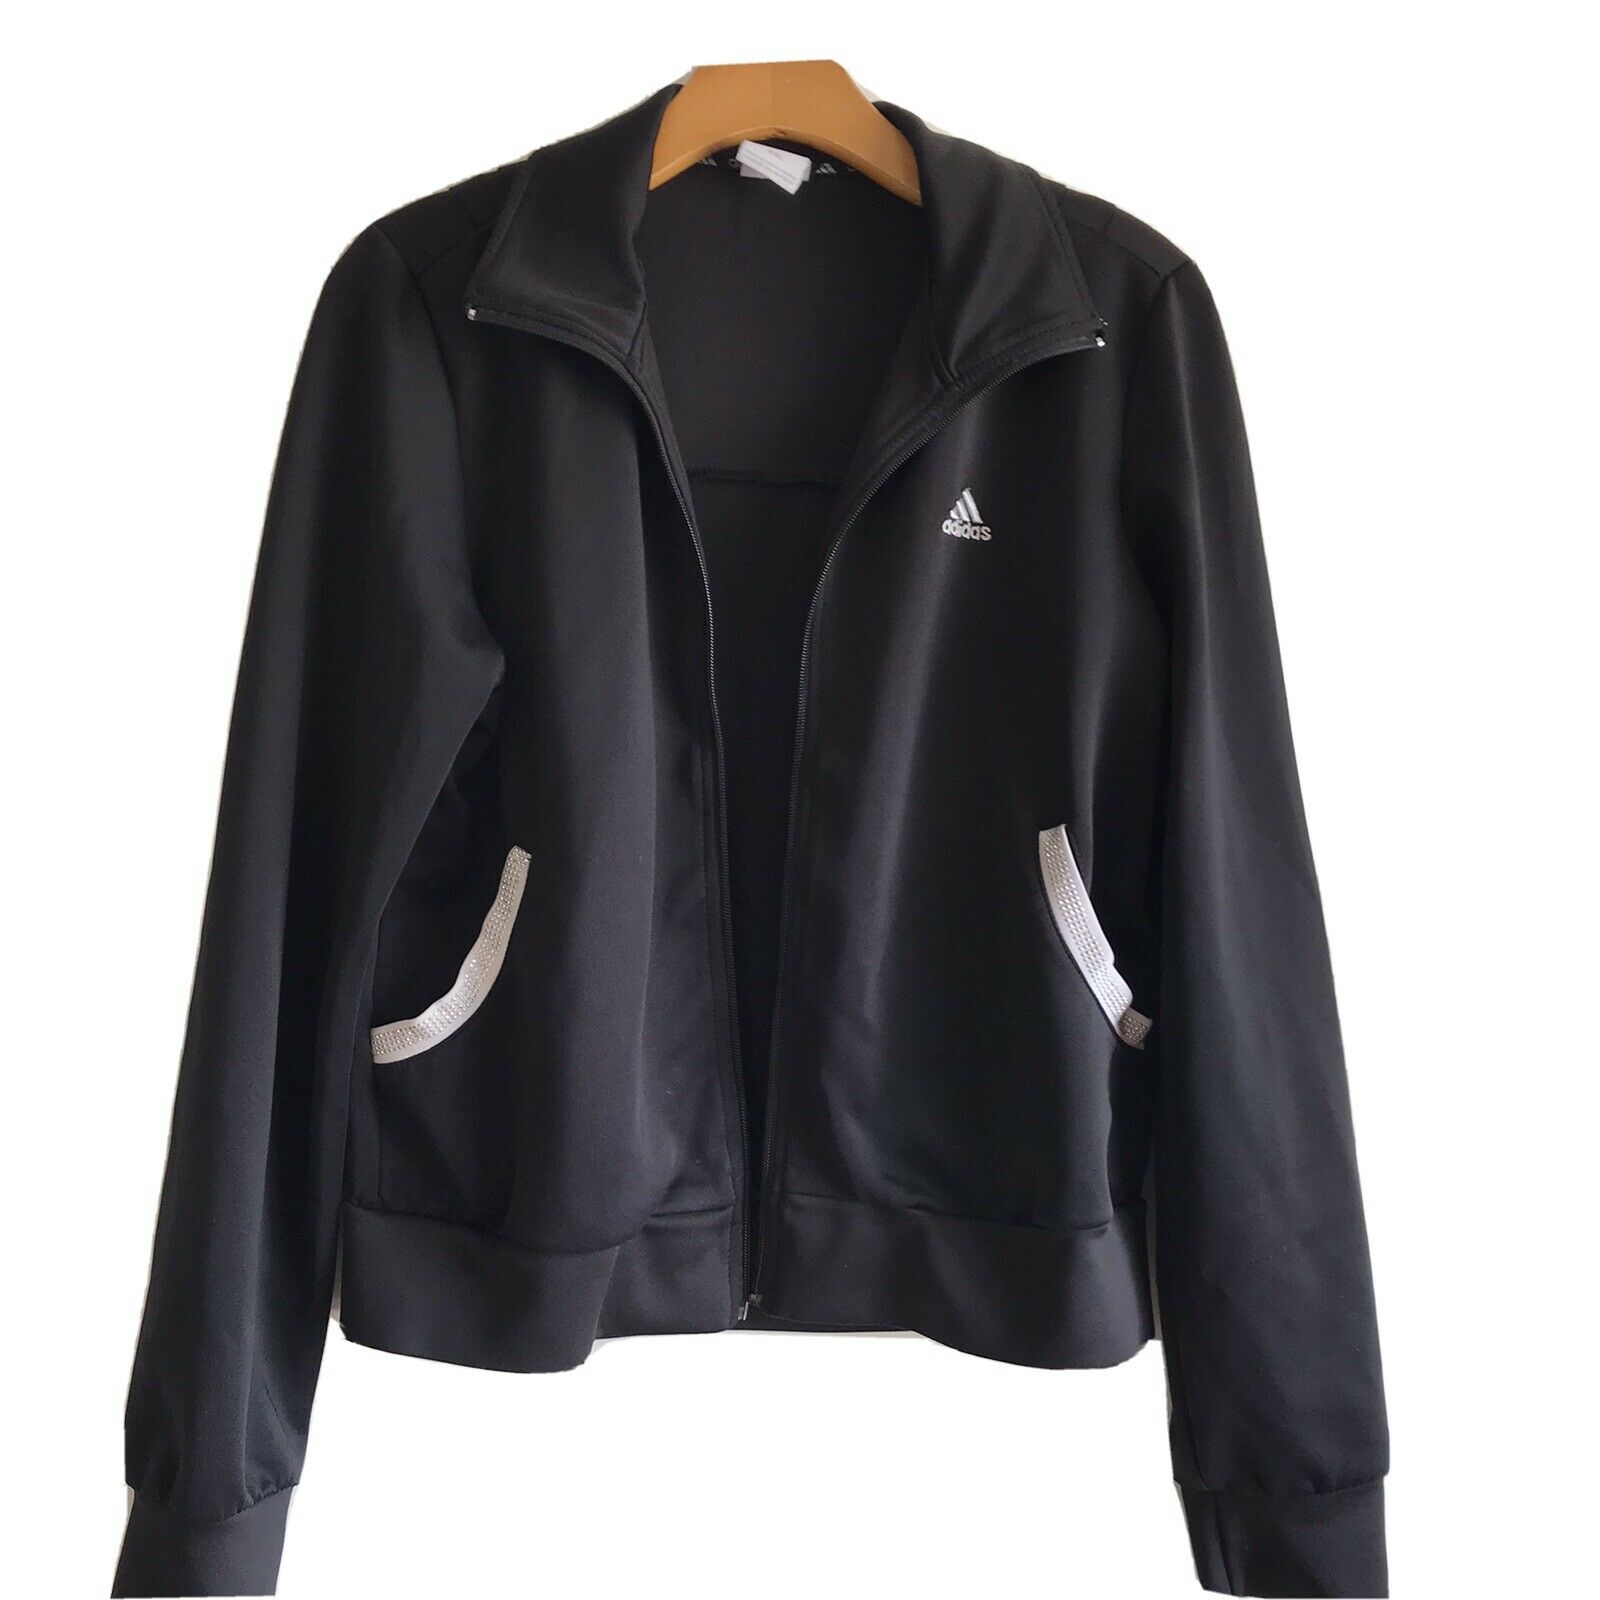 Adidas Girls Size Xxl Black Studded Rhinestone Broket Zipper Jacket